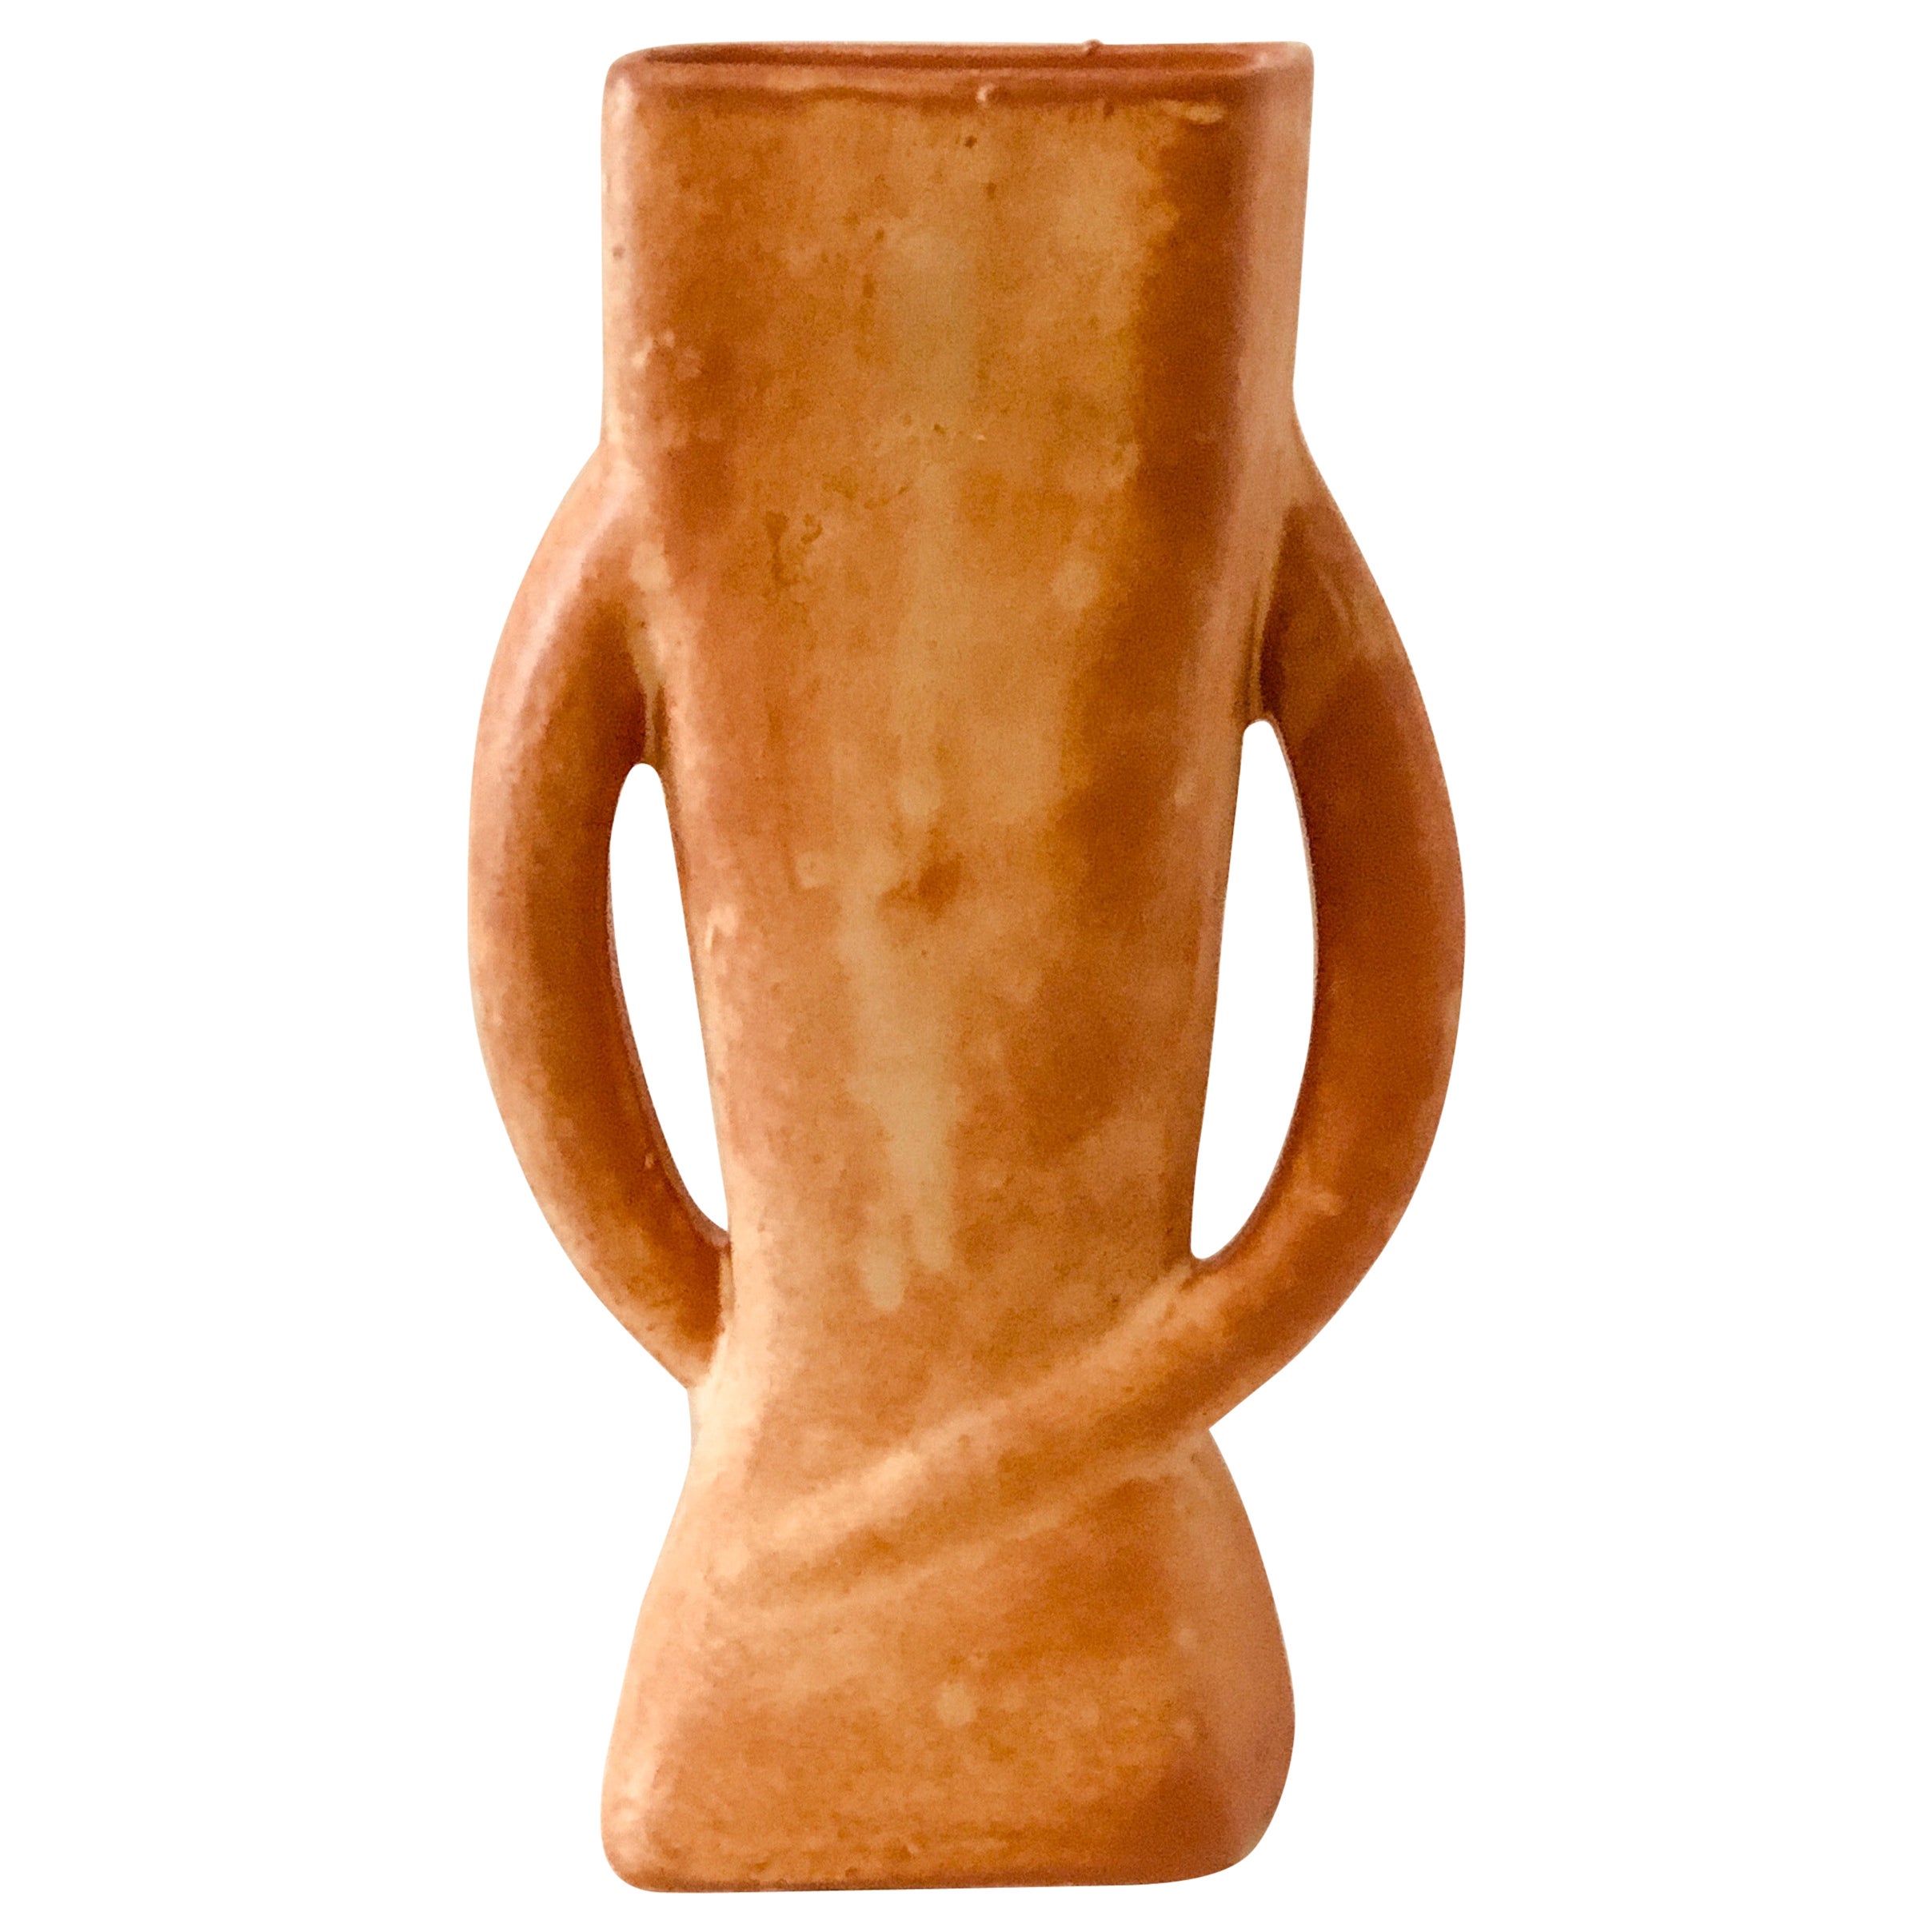 Vallauris French Ceramic Vase Modernist Organic Vessel